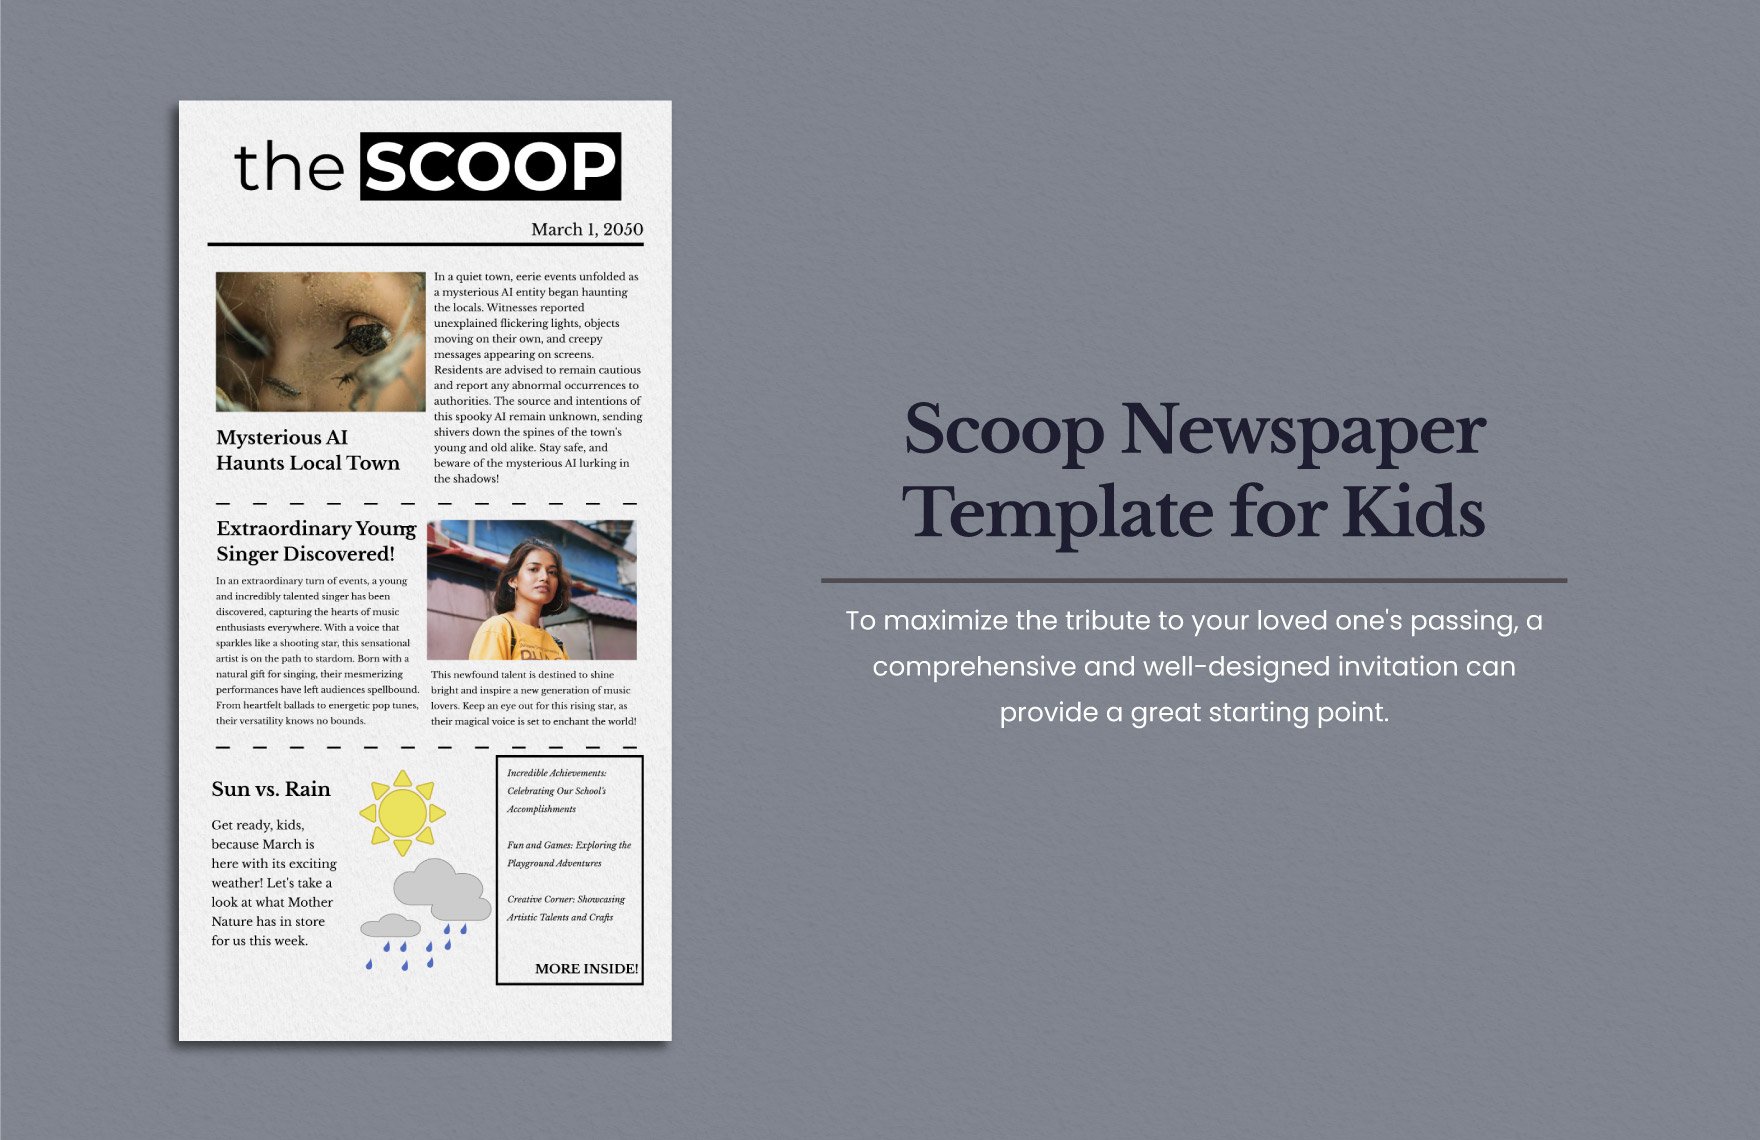 Scoop Newspaper Template for Kids